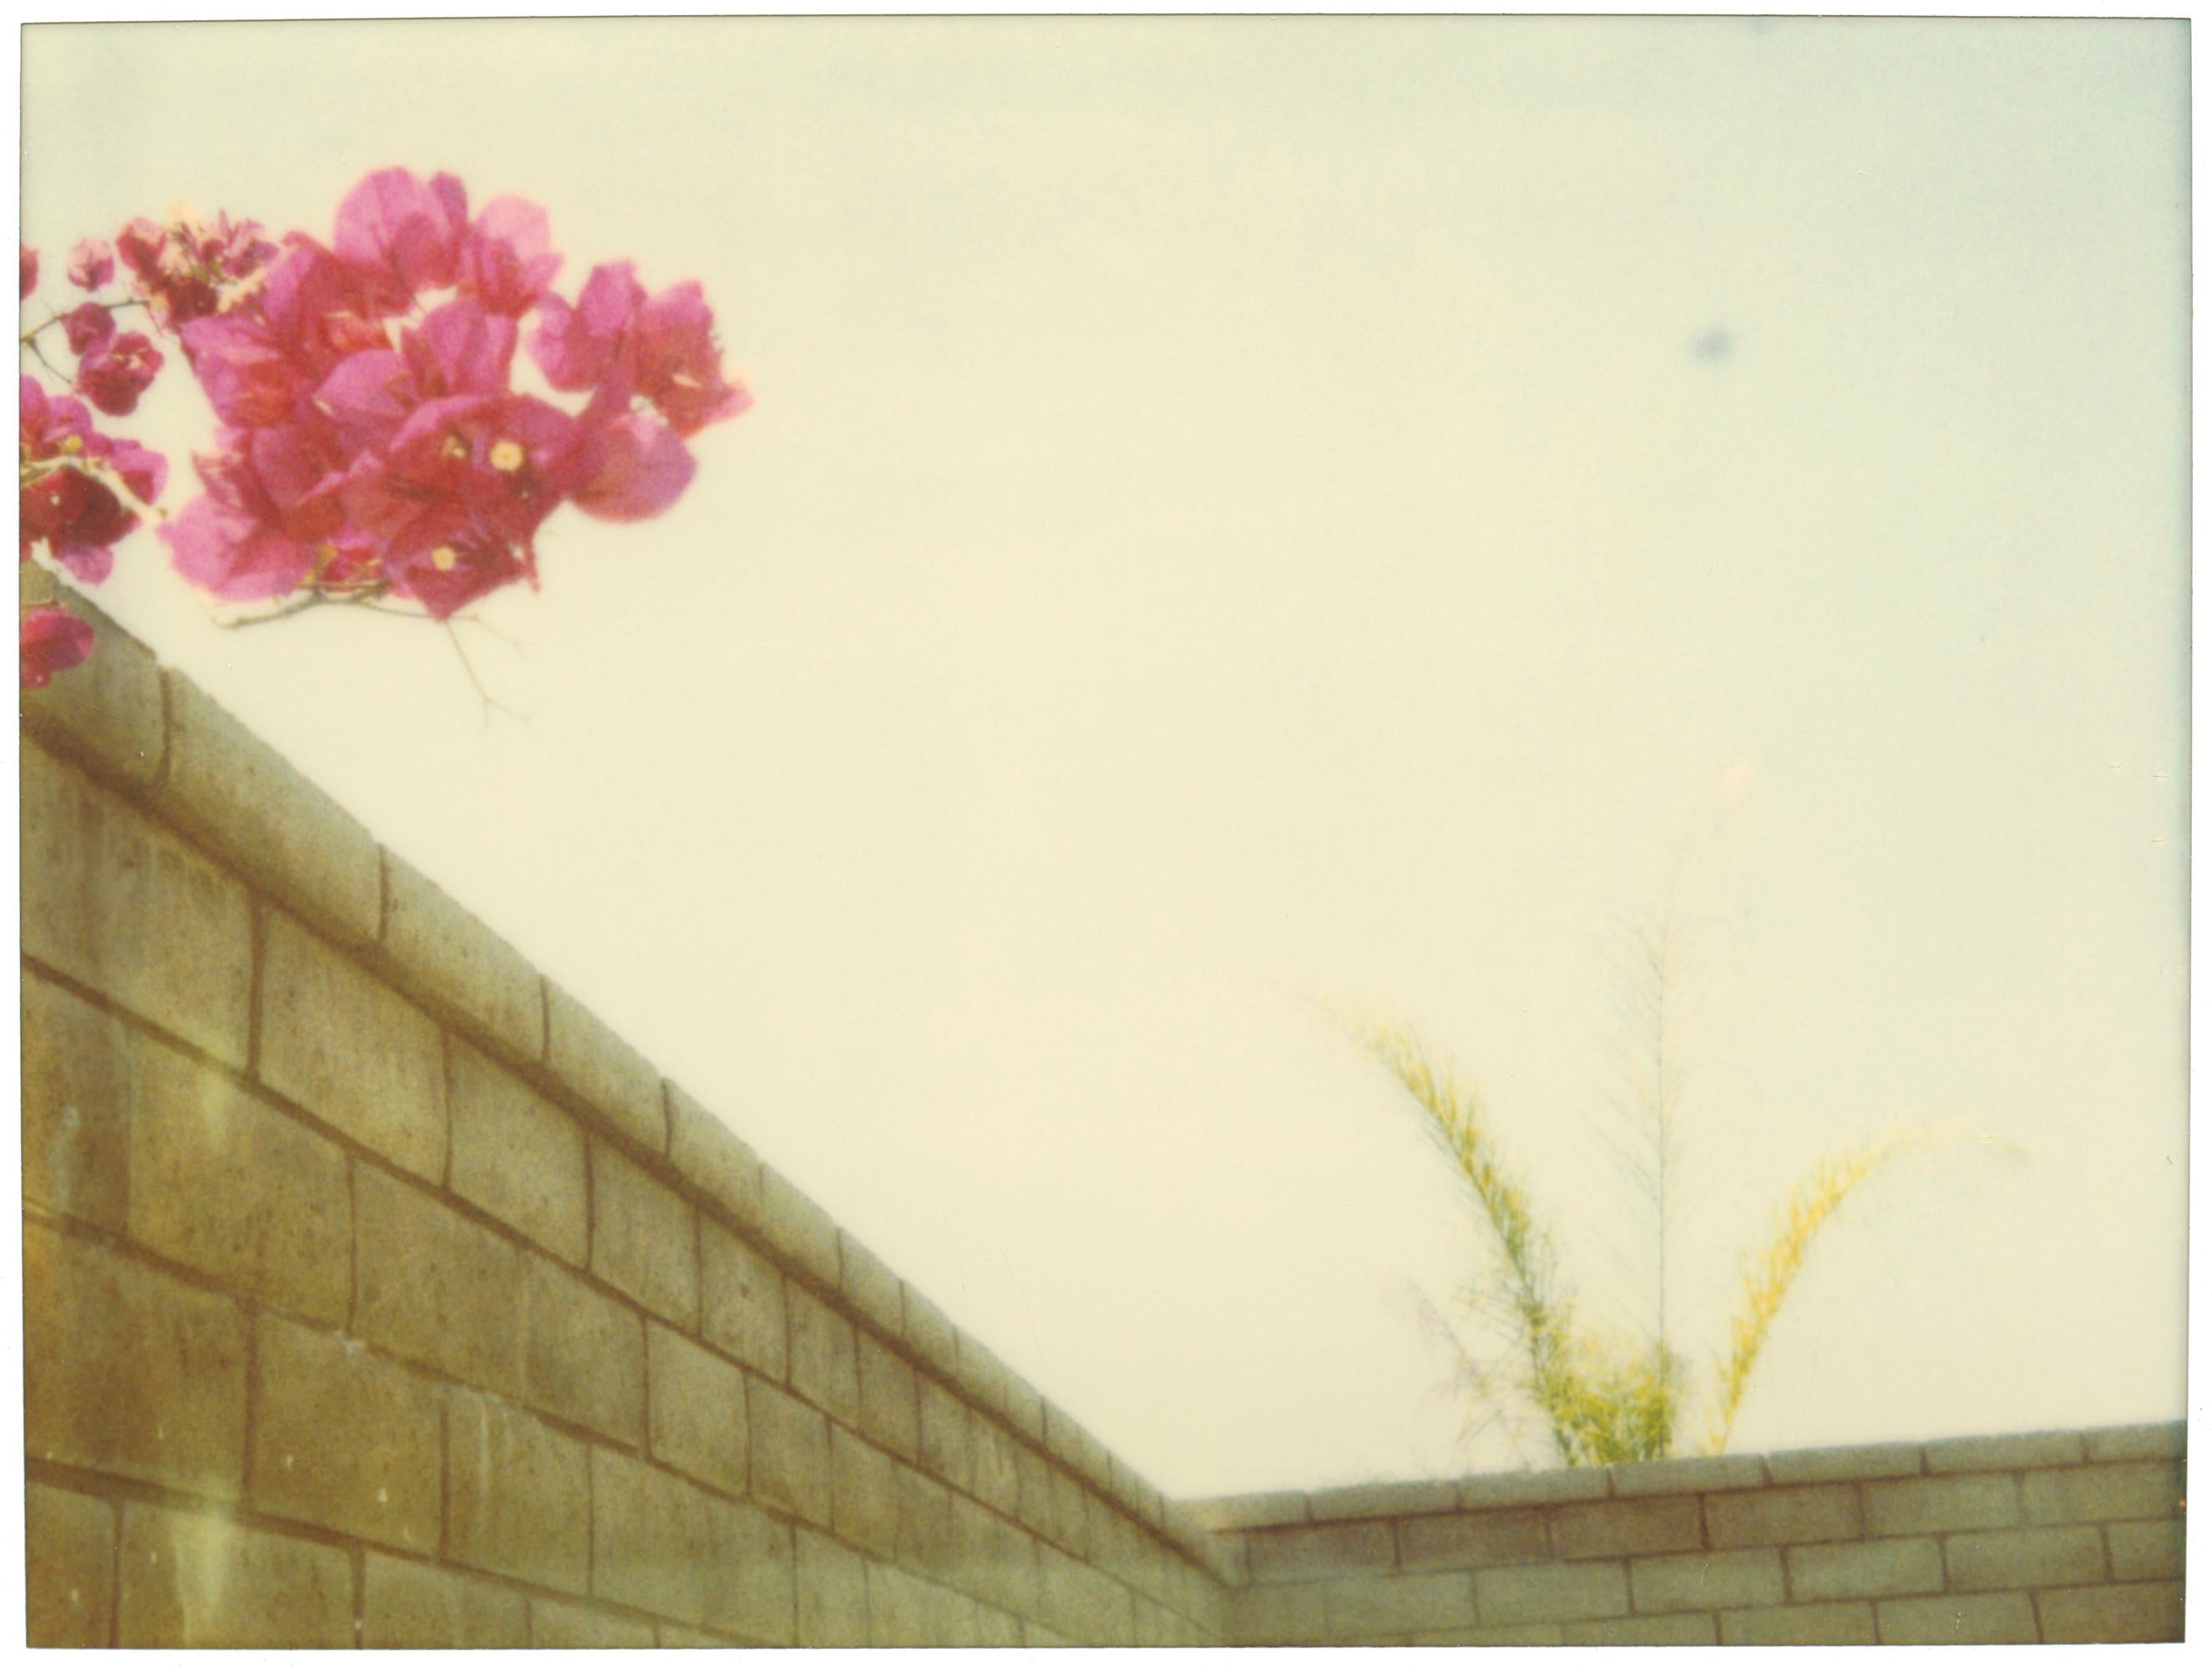 Suburbia, analog, mounted. Polaroid, photograph, 21st Century, landscape,  - Contemporary Photograph by Stefanie Schneider